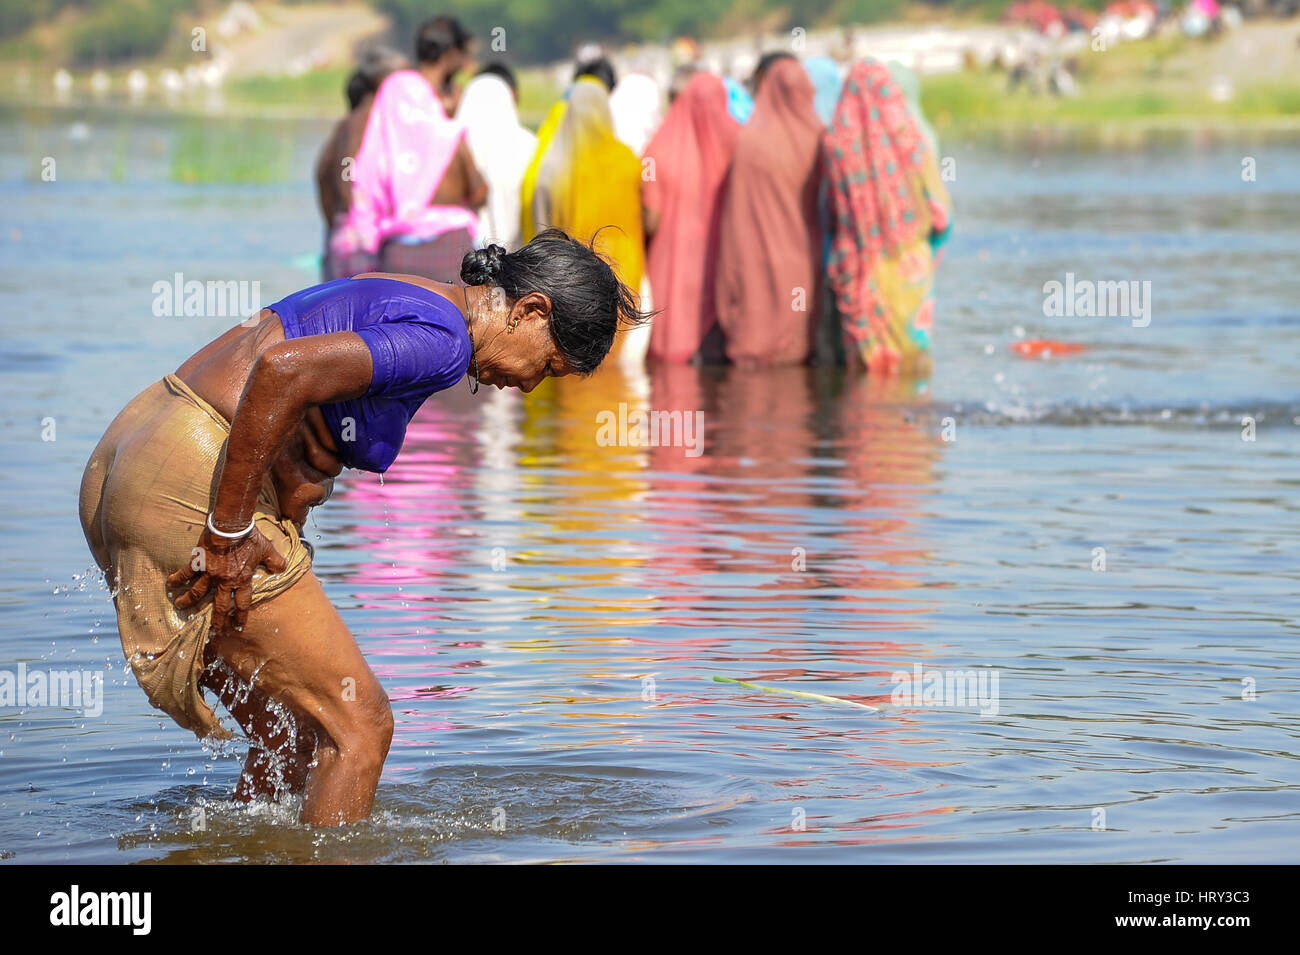 Ritual Bathing In The Waters During Baneshwar Mela Stock Photo Alamy